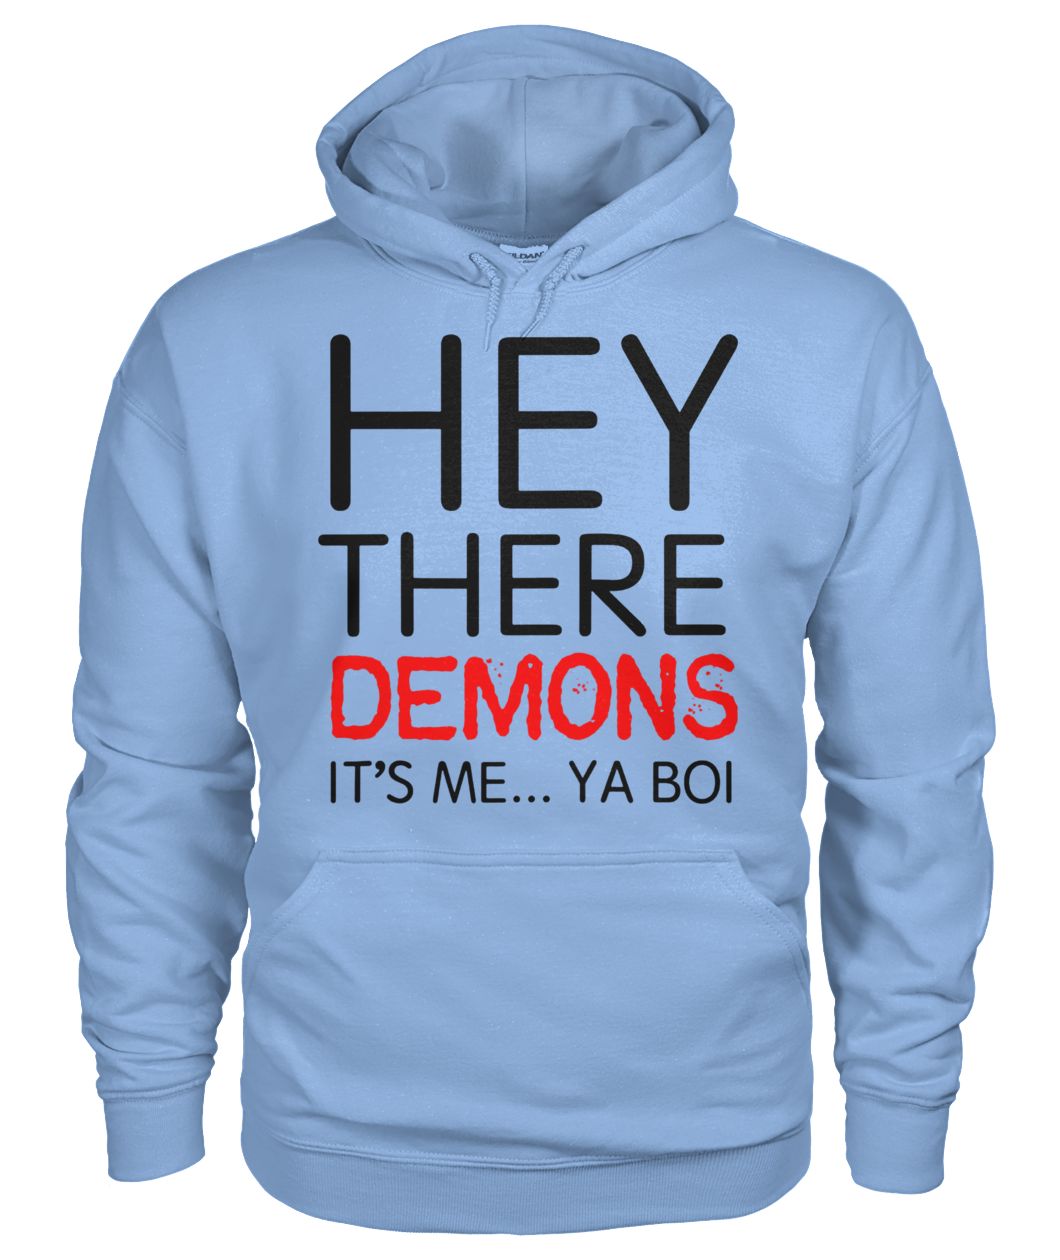 Hey there demons it's me ya boi gildan hoodie